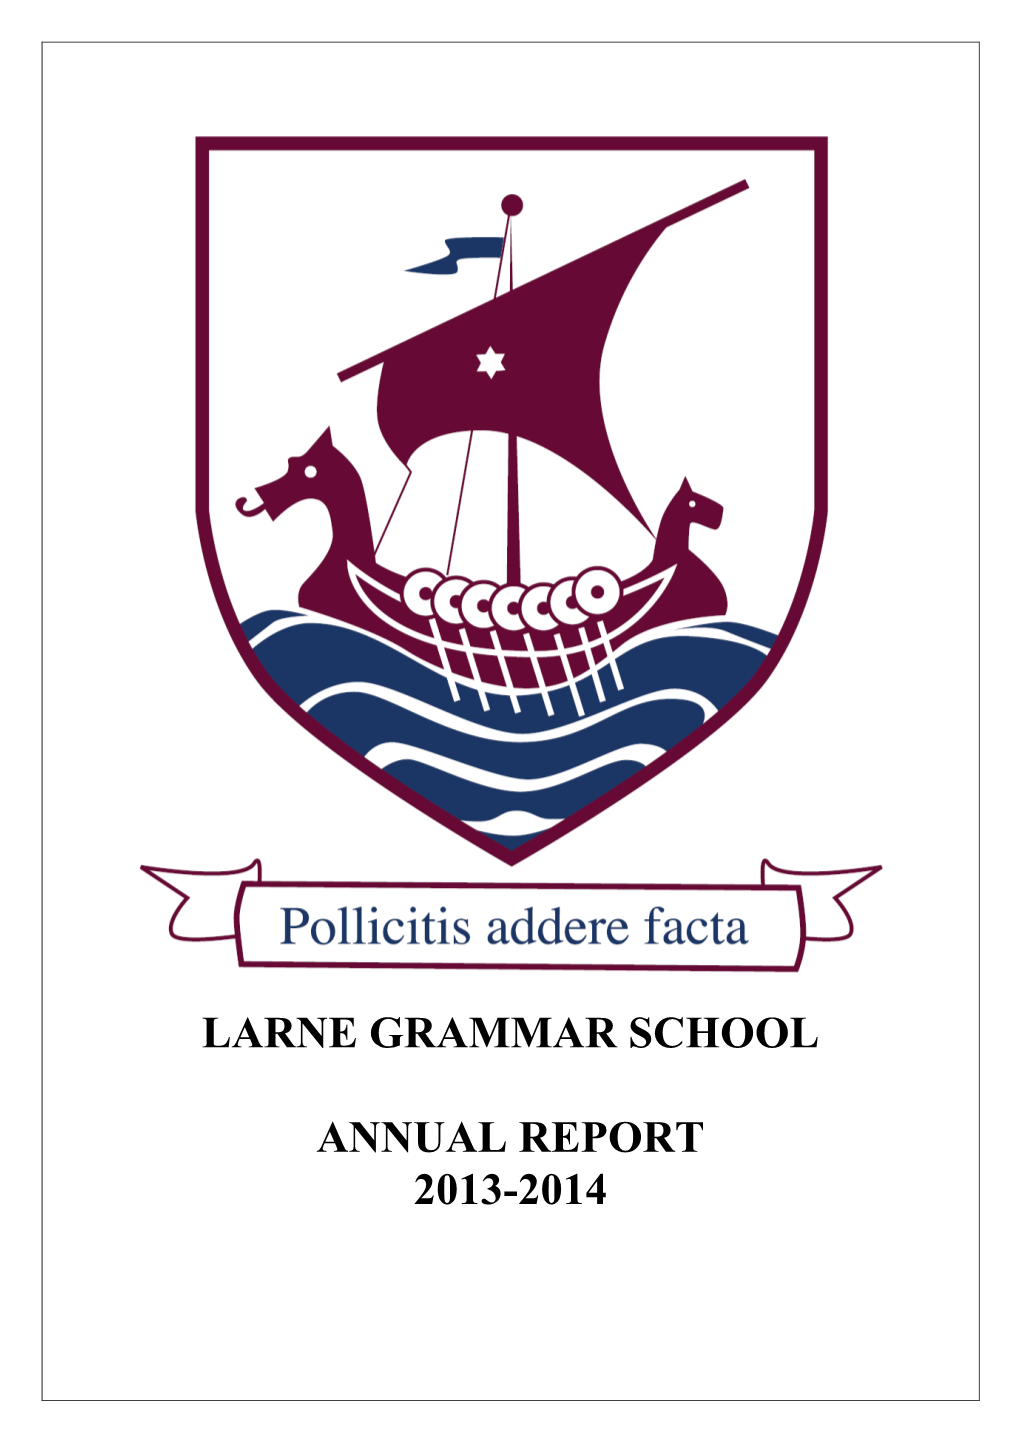 Larne Grammar School Annual Report 2013-2014